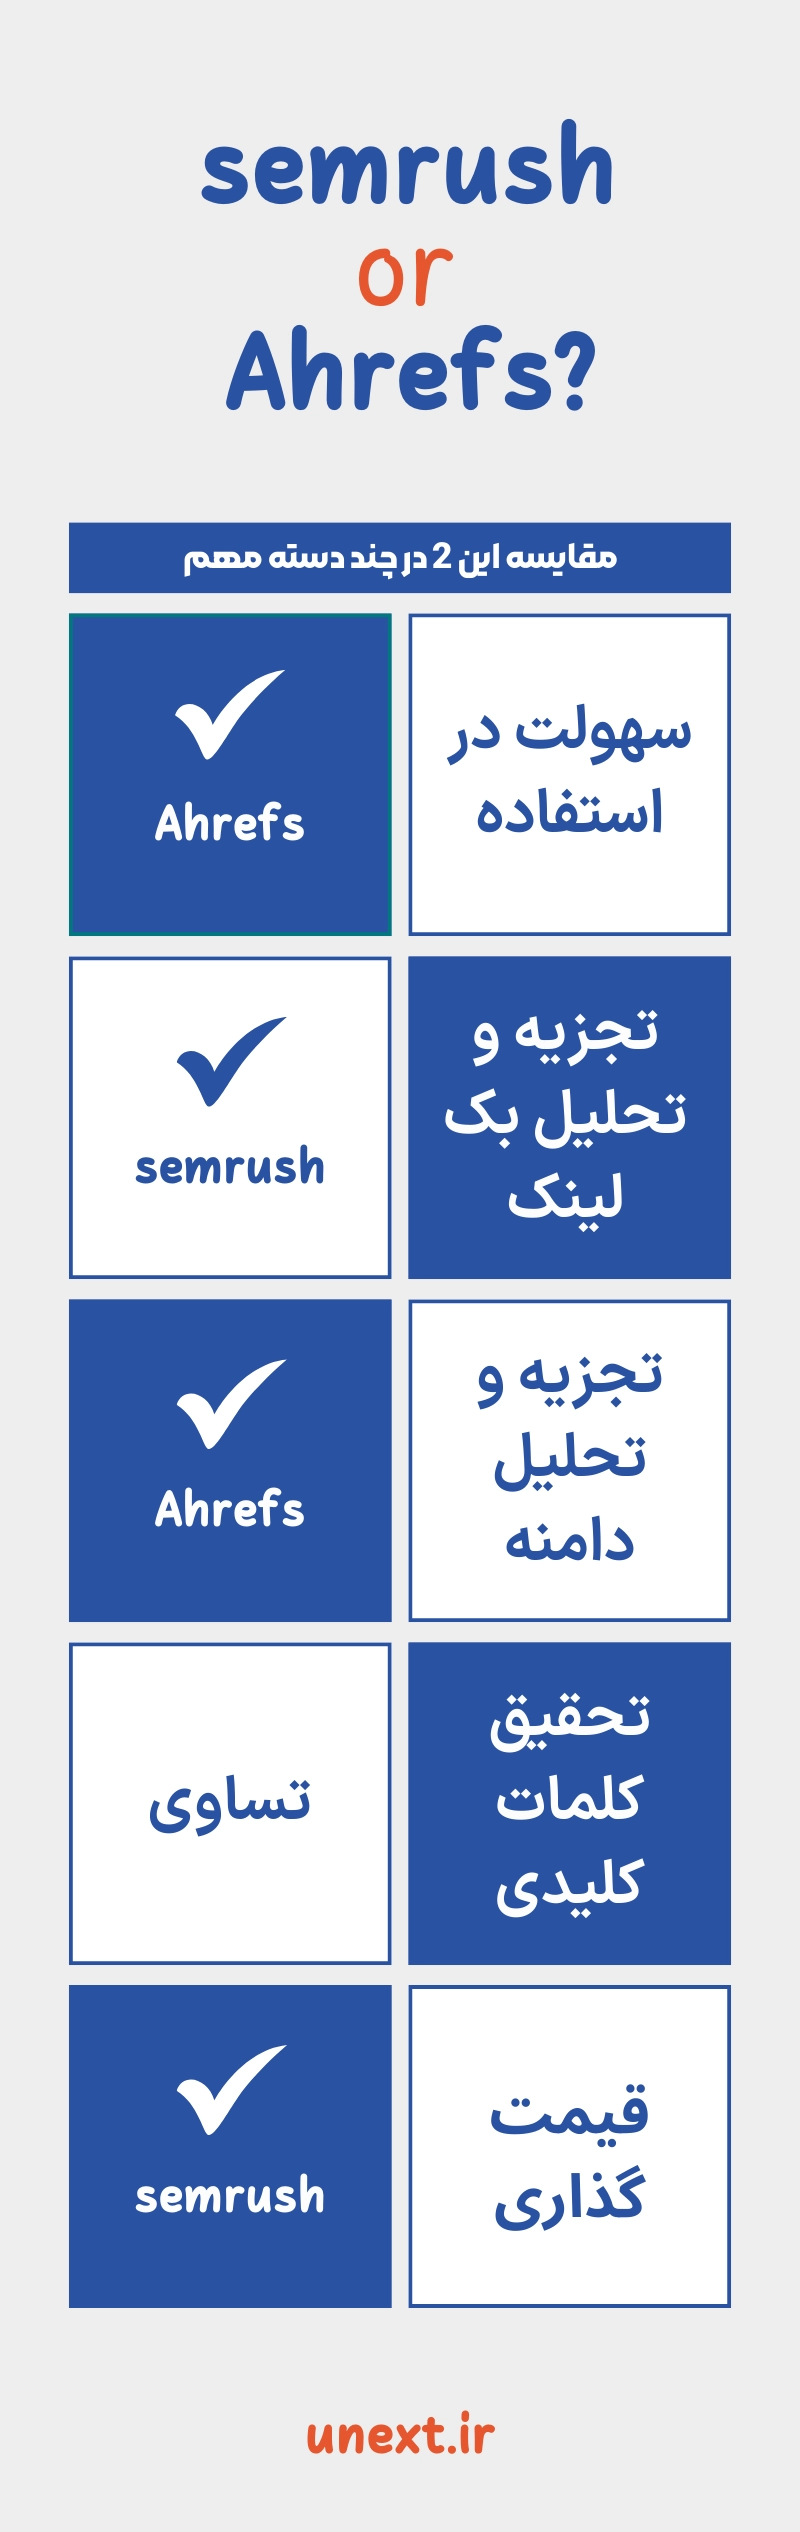 semrush or ahrefs کدام برنده است؟